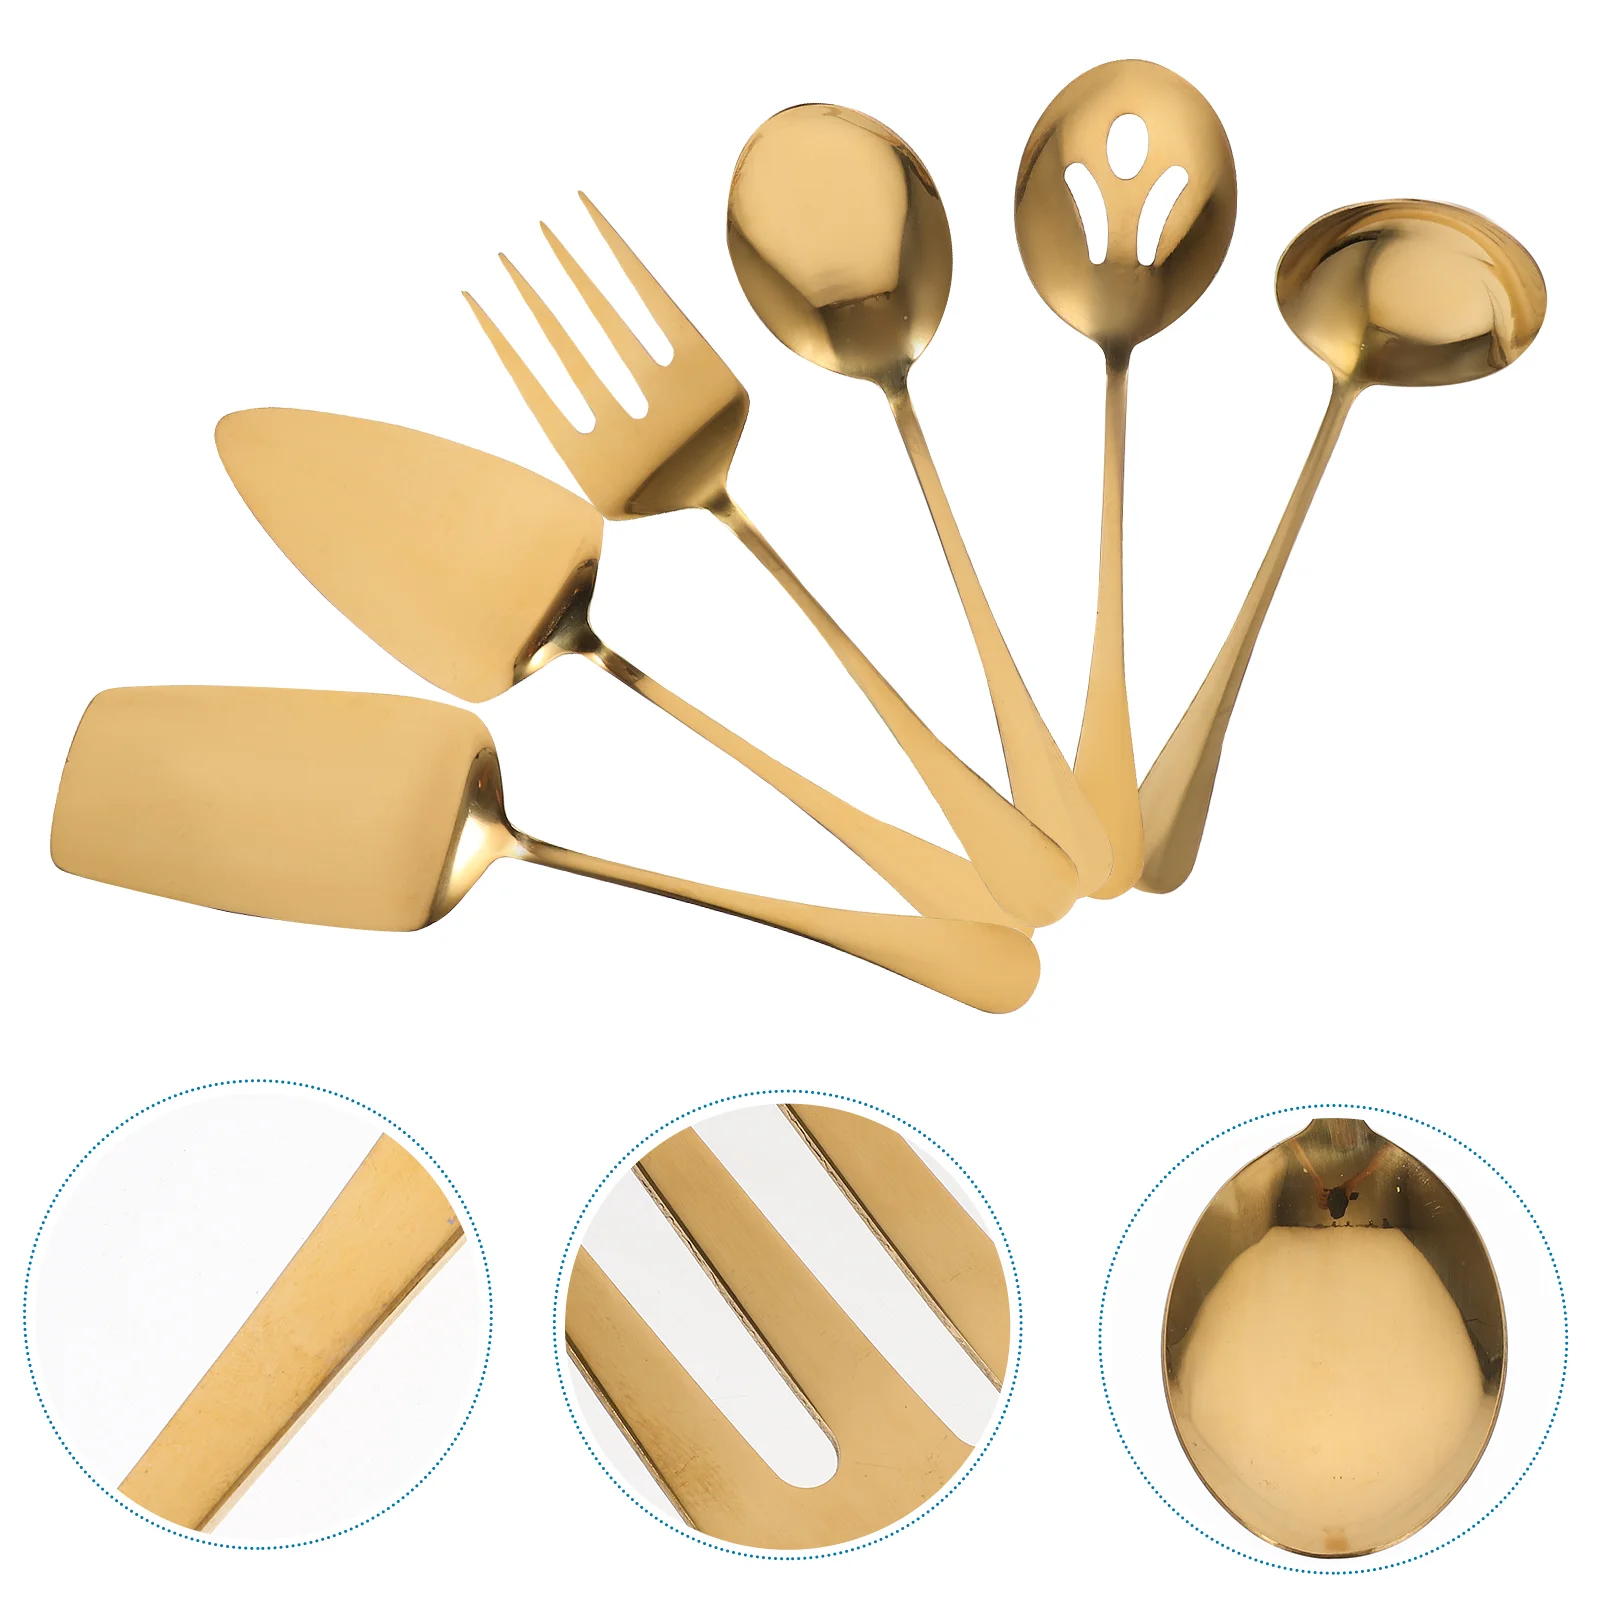 

Stainless Steel Cutlery Set Steak Fork Spoon Kit Flatware Tableware Serving Utensils Kitchen Supplies Portable Forks